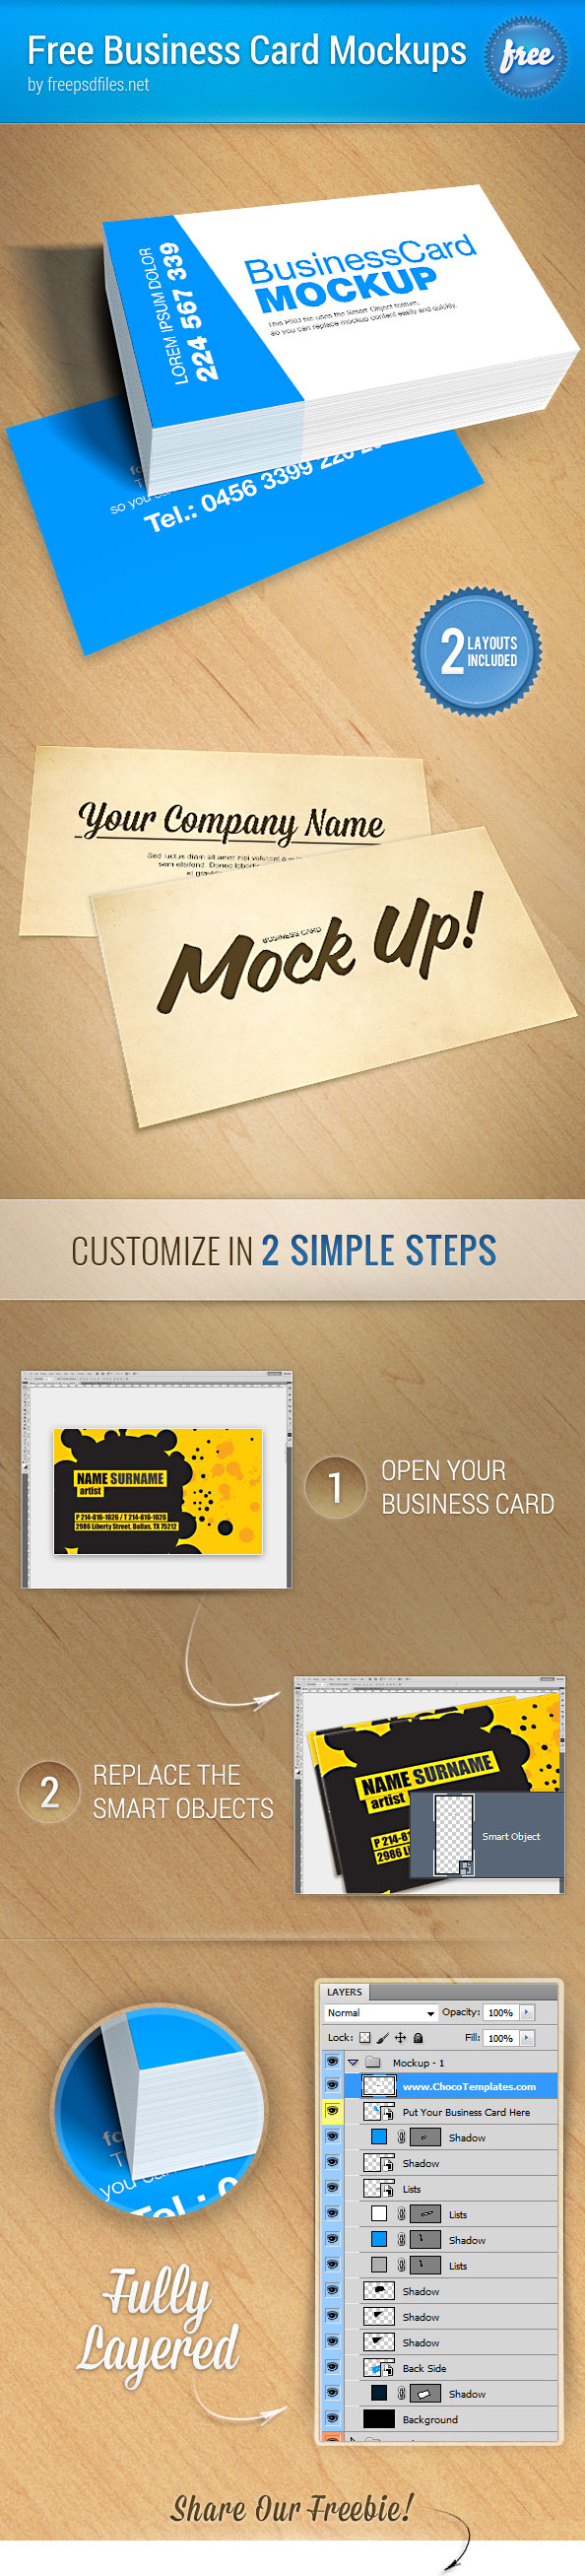 Business Card Mockup PSD File